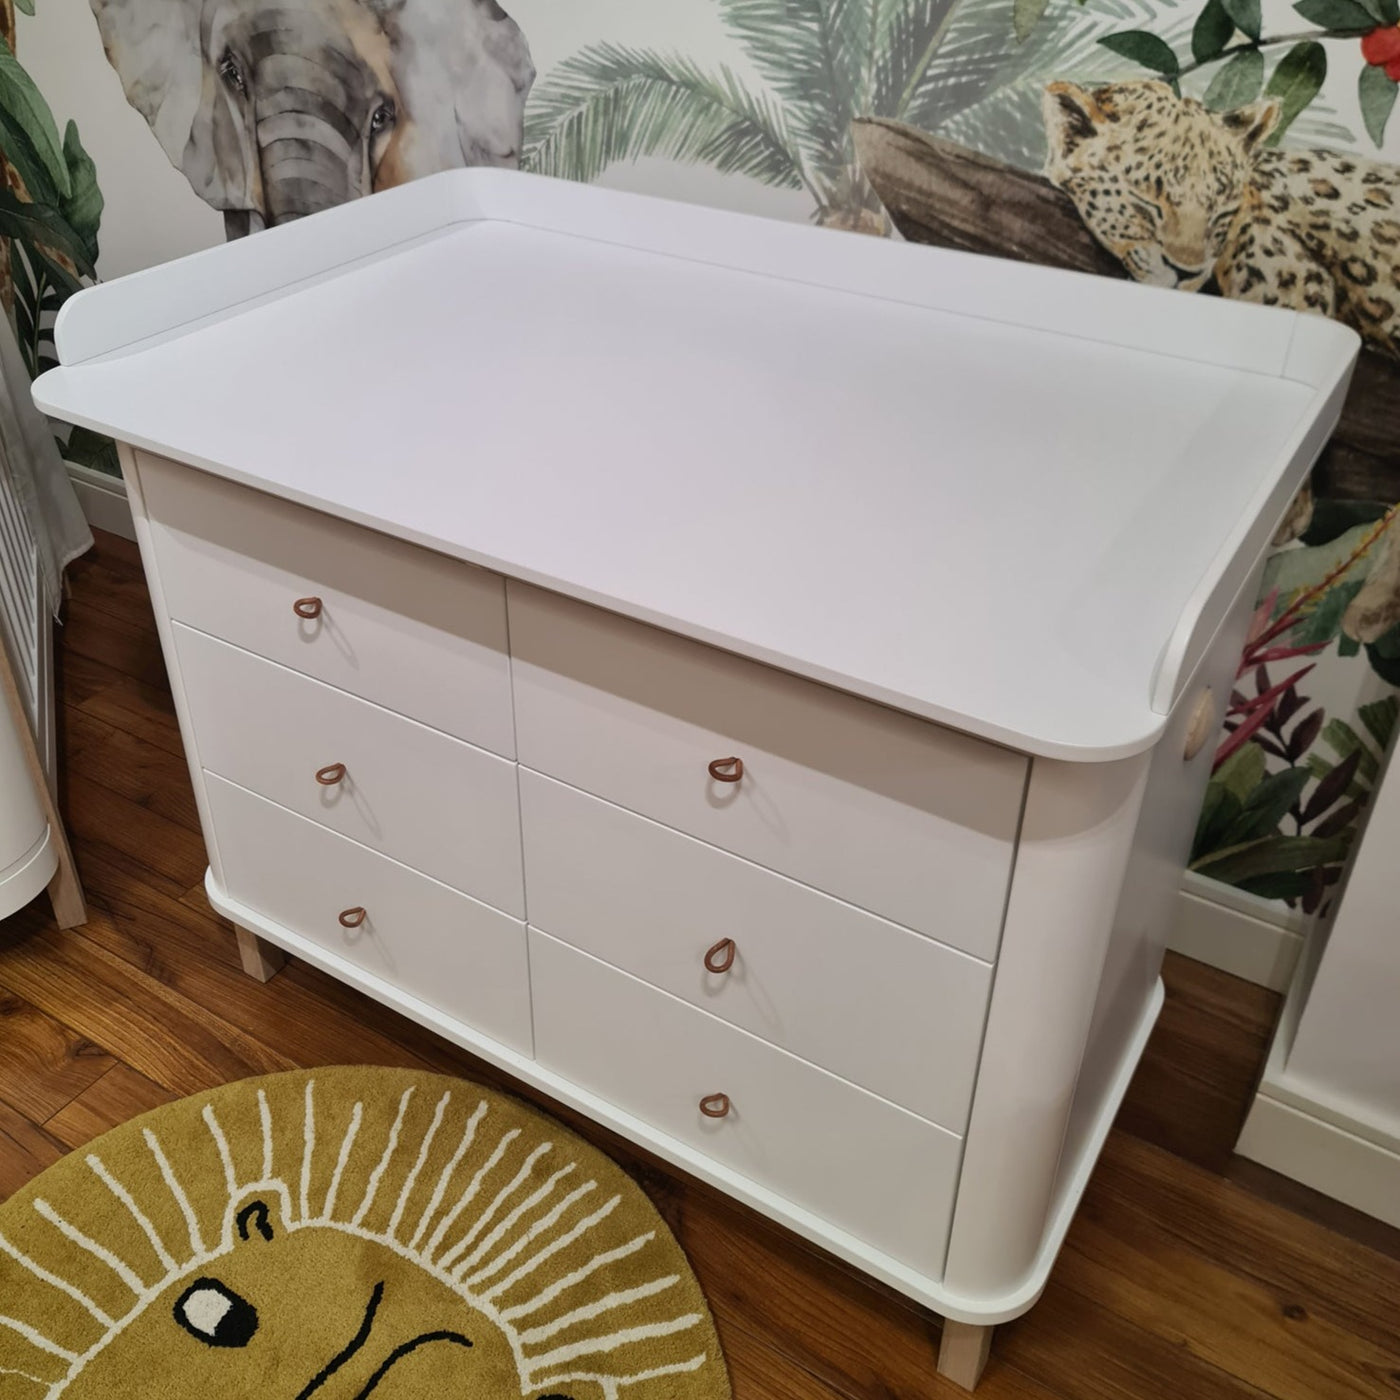 Ex Display Oliver Furniture Nursery 6 Drawer Dresser (with changer top) - White/Oak